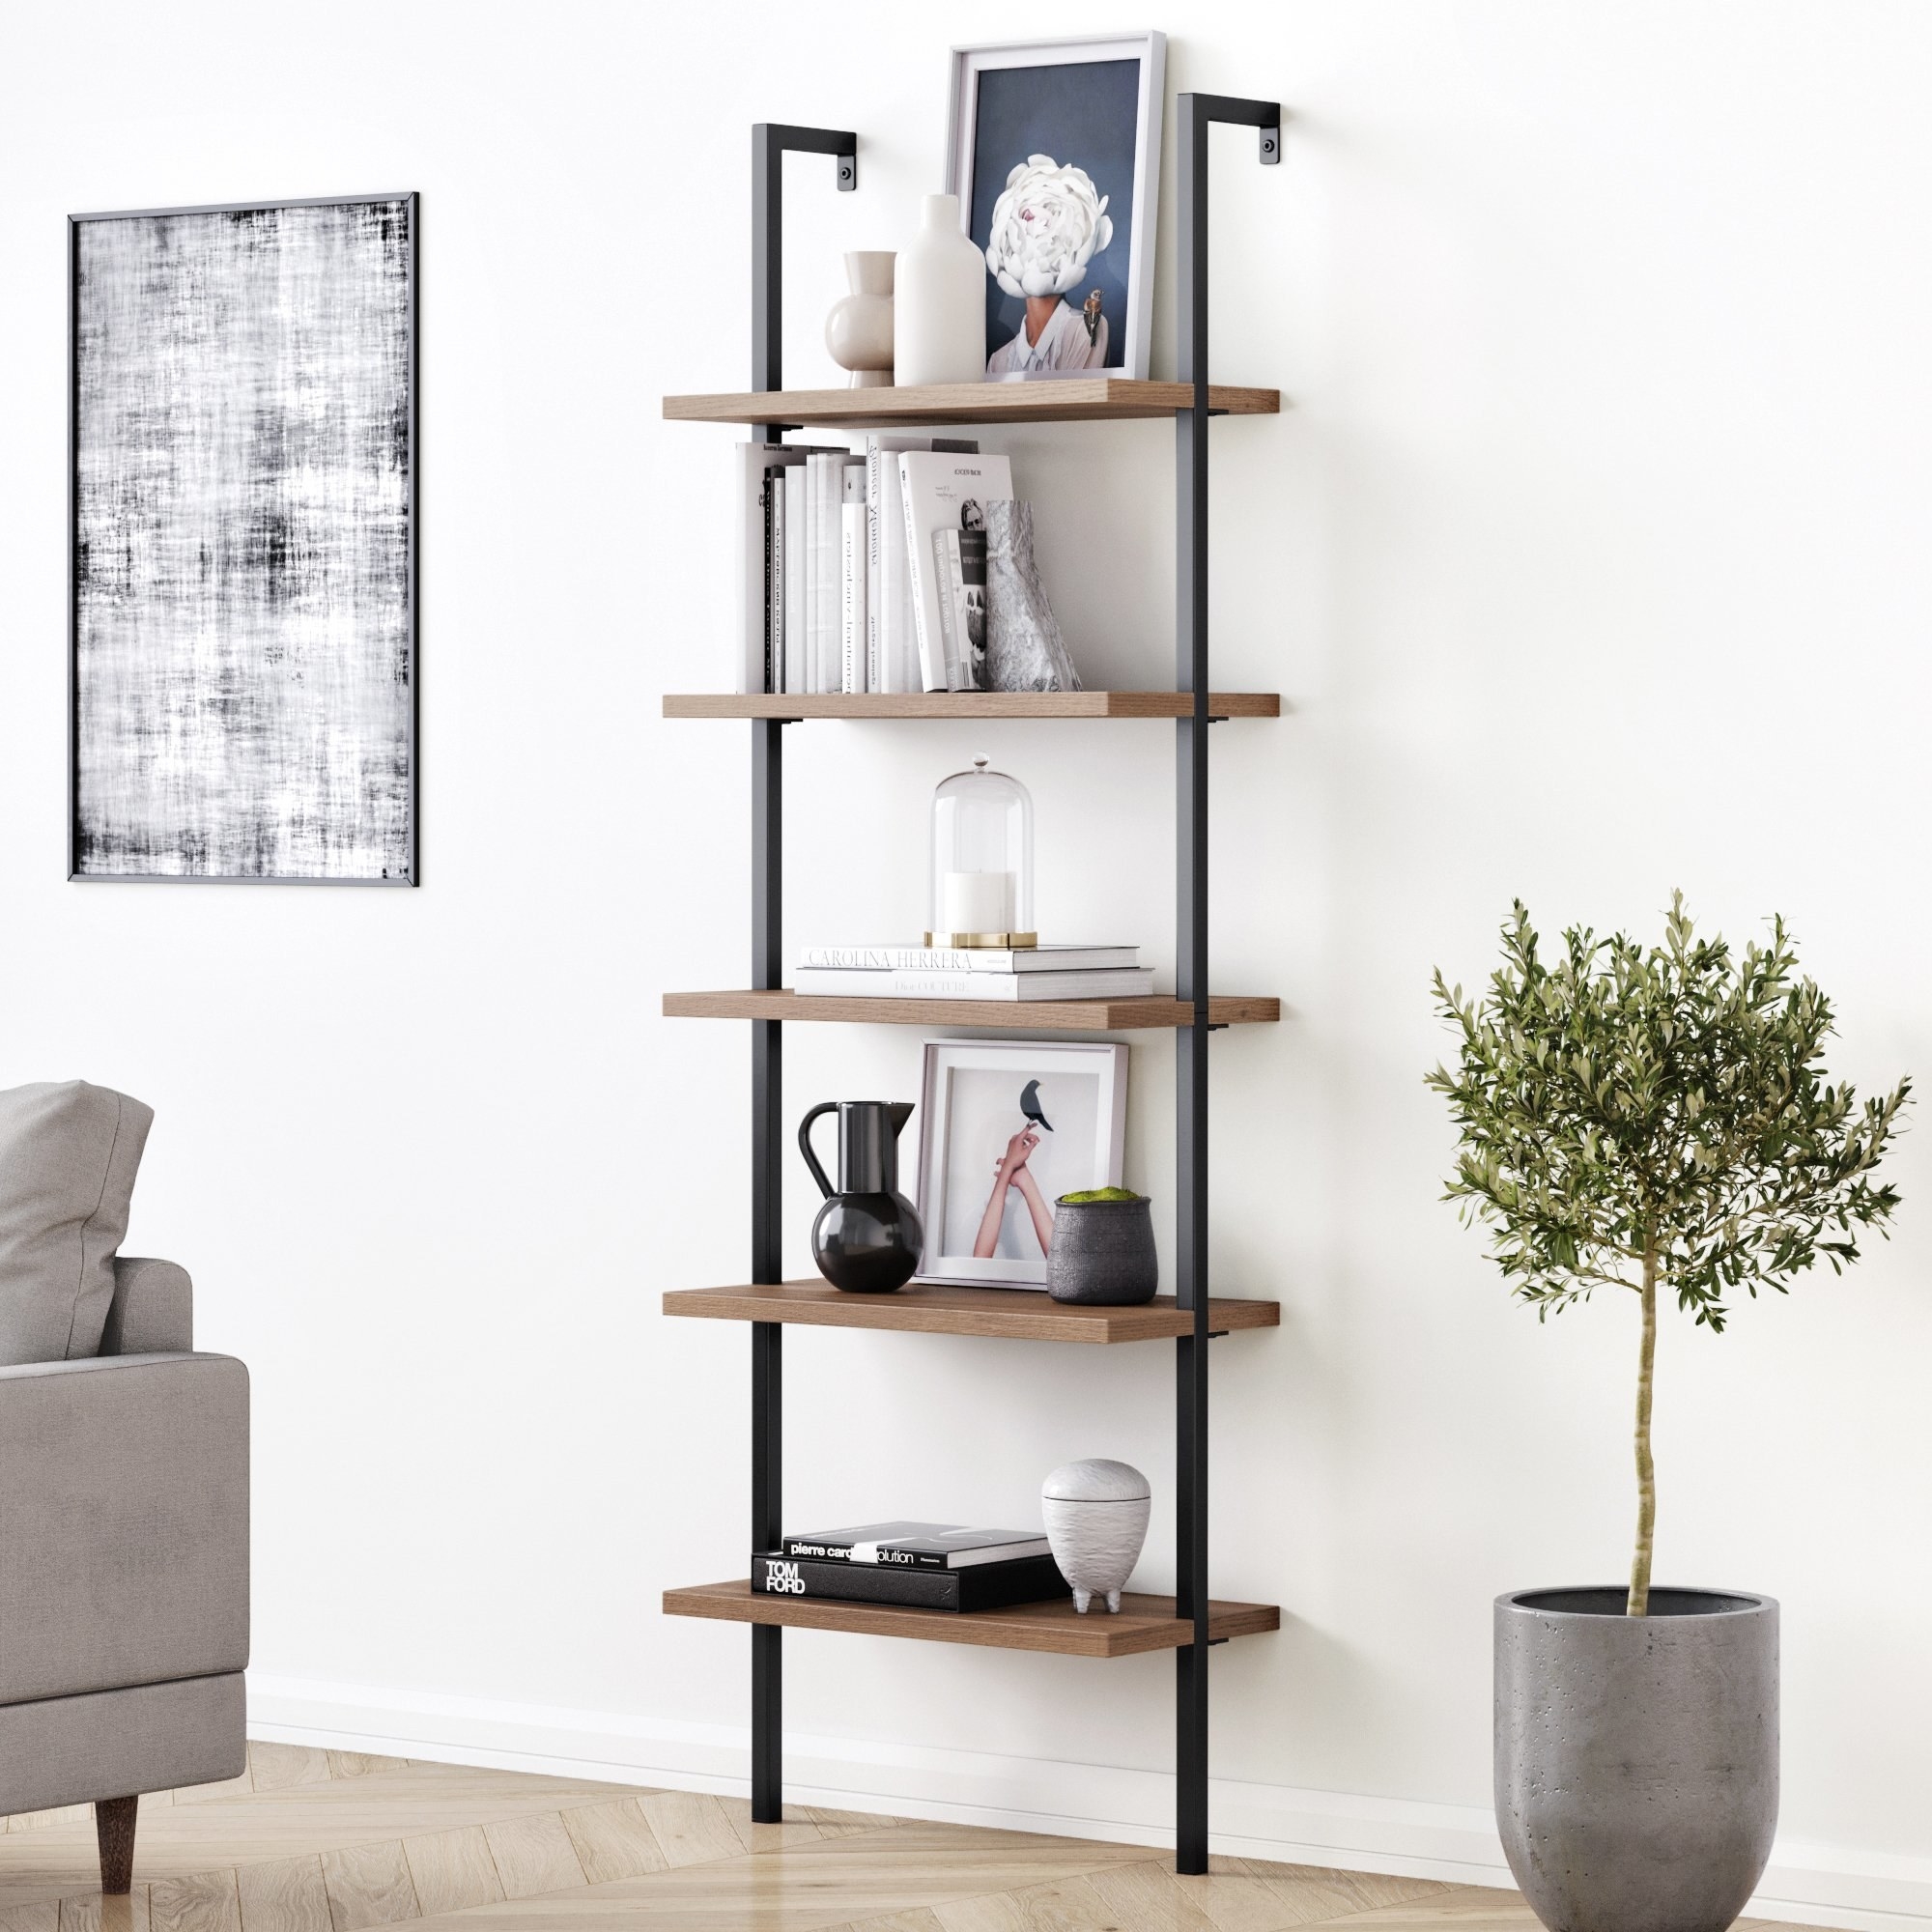 The 5-Shelf Ladder Bookcase